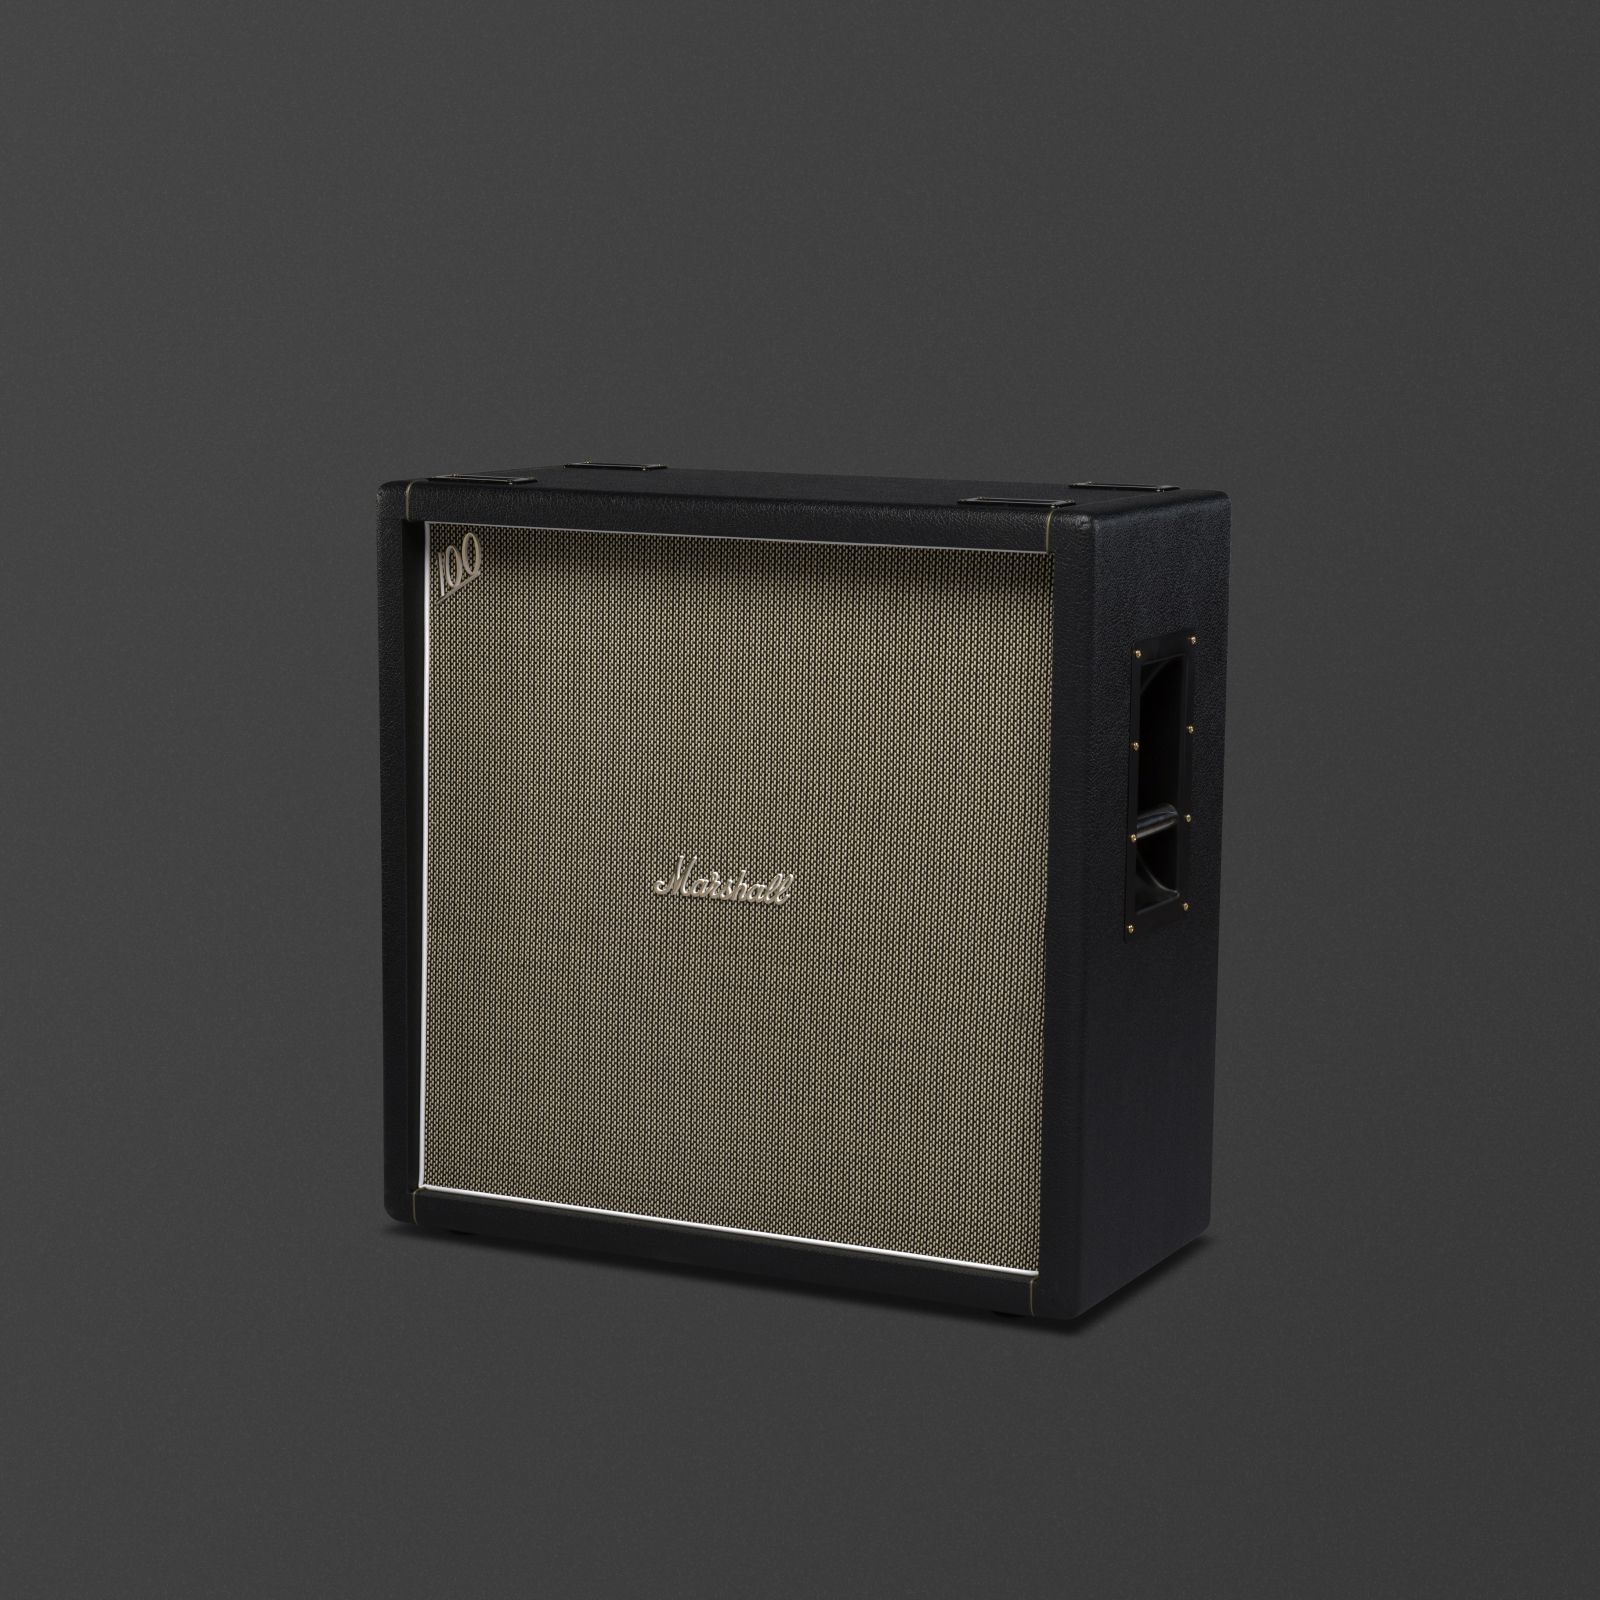 Caja acústica Marshall 1960BHW con aspecto vintage.  